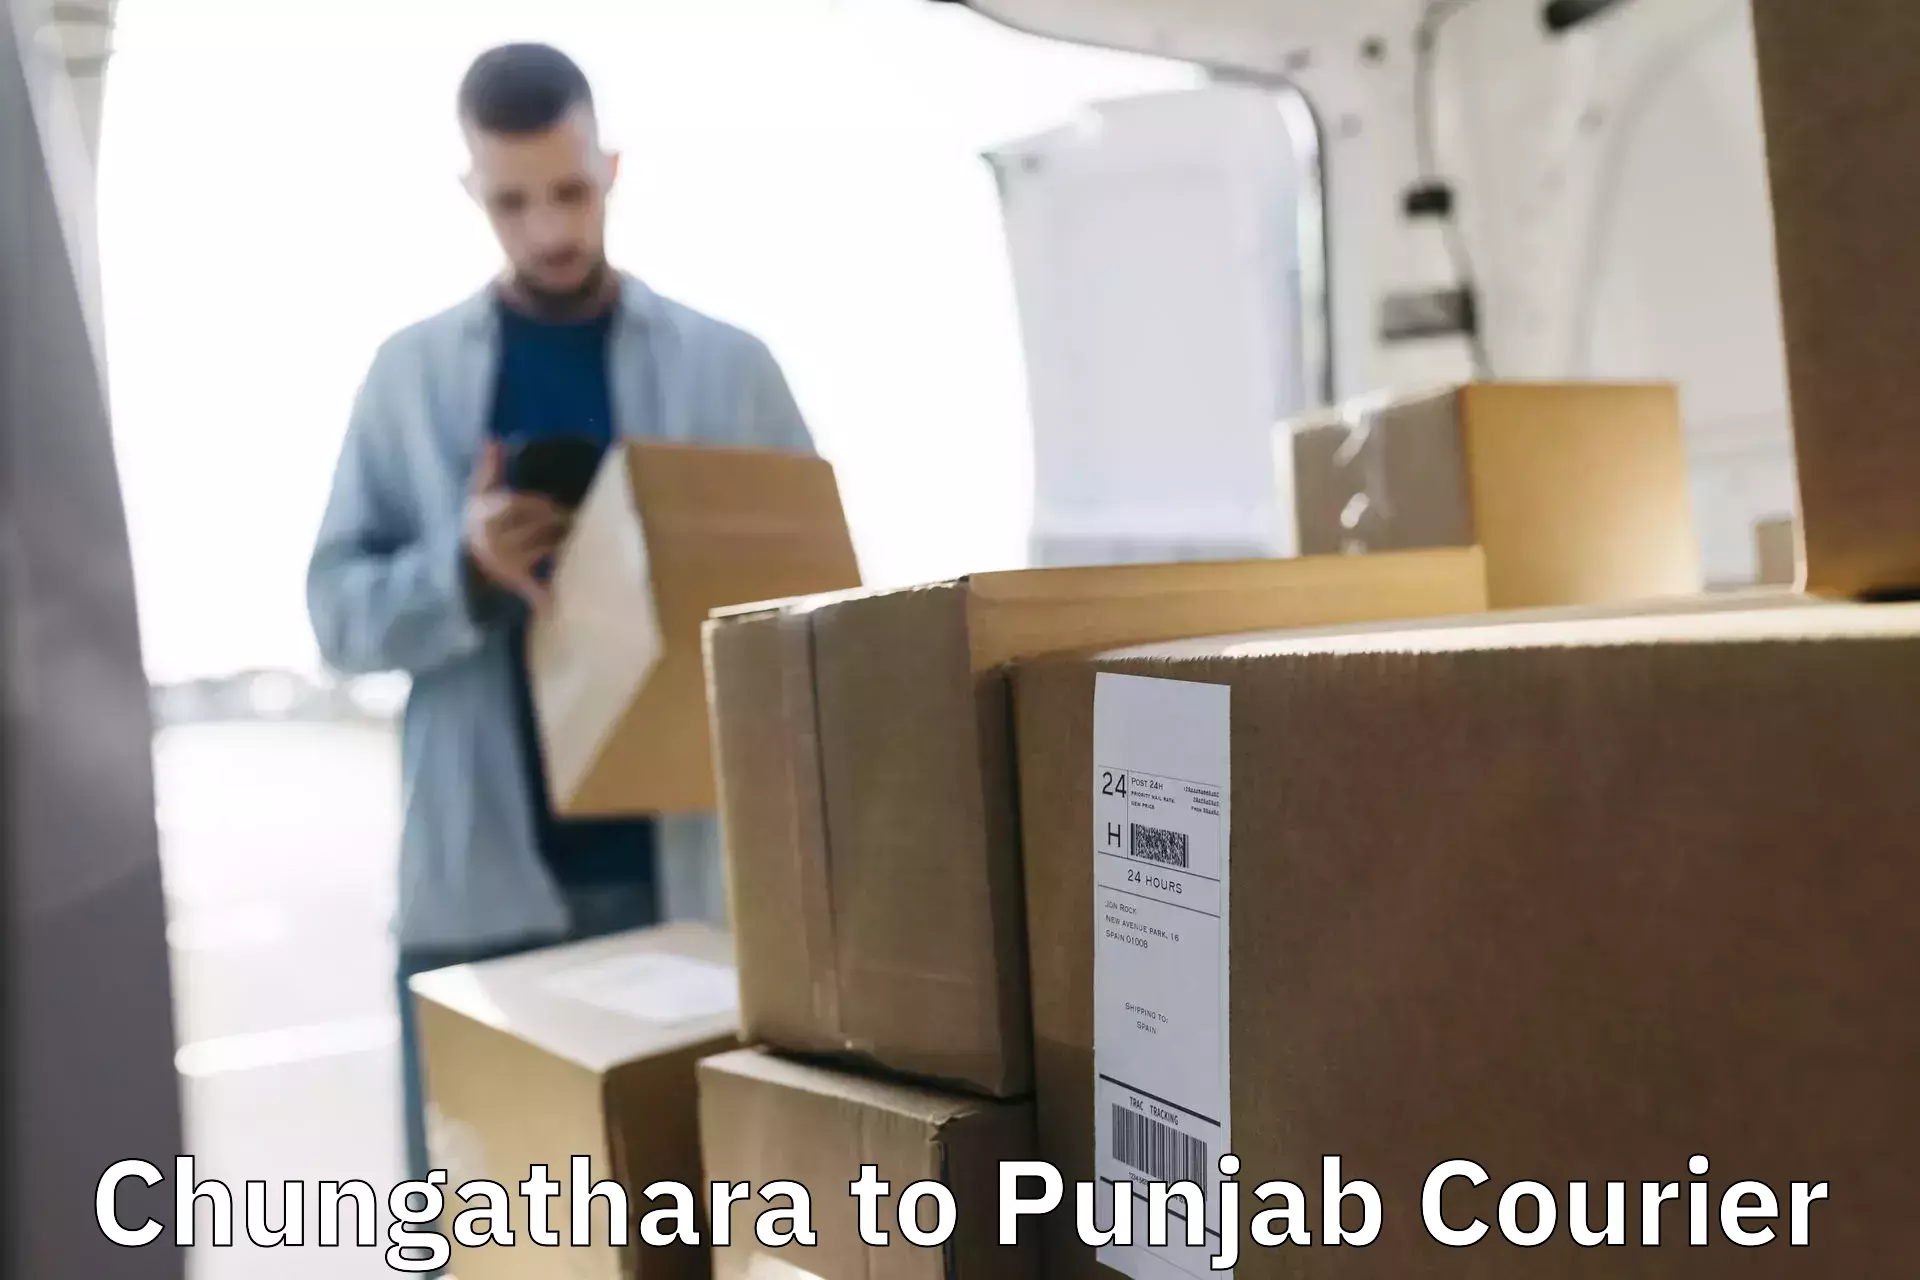 Expedited shipping methods Chungathara to Batala